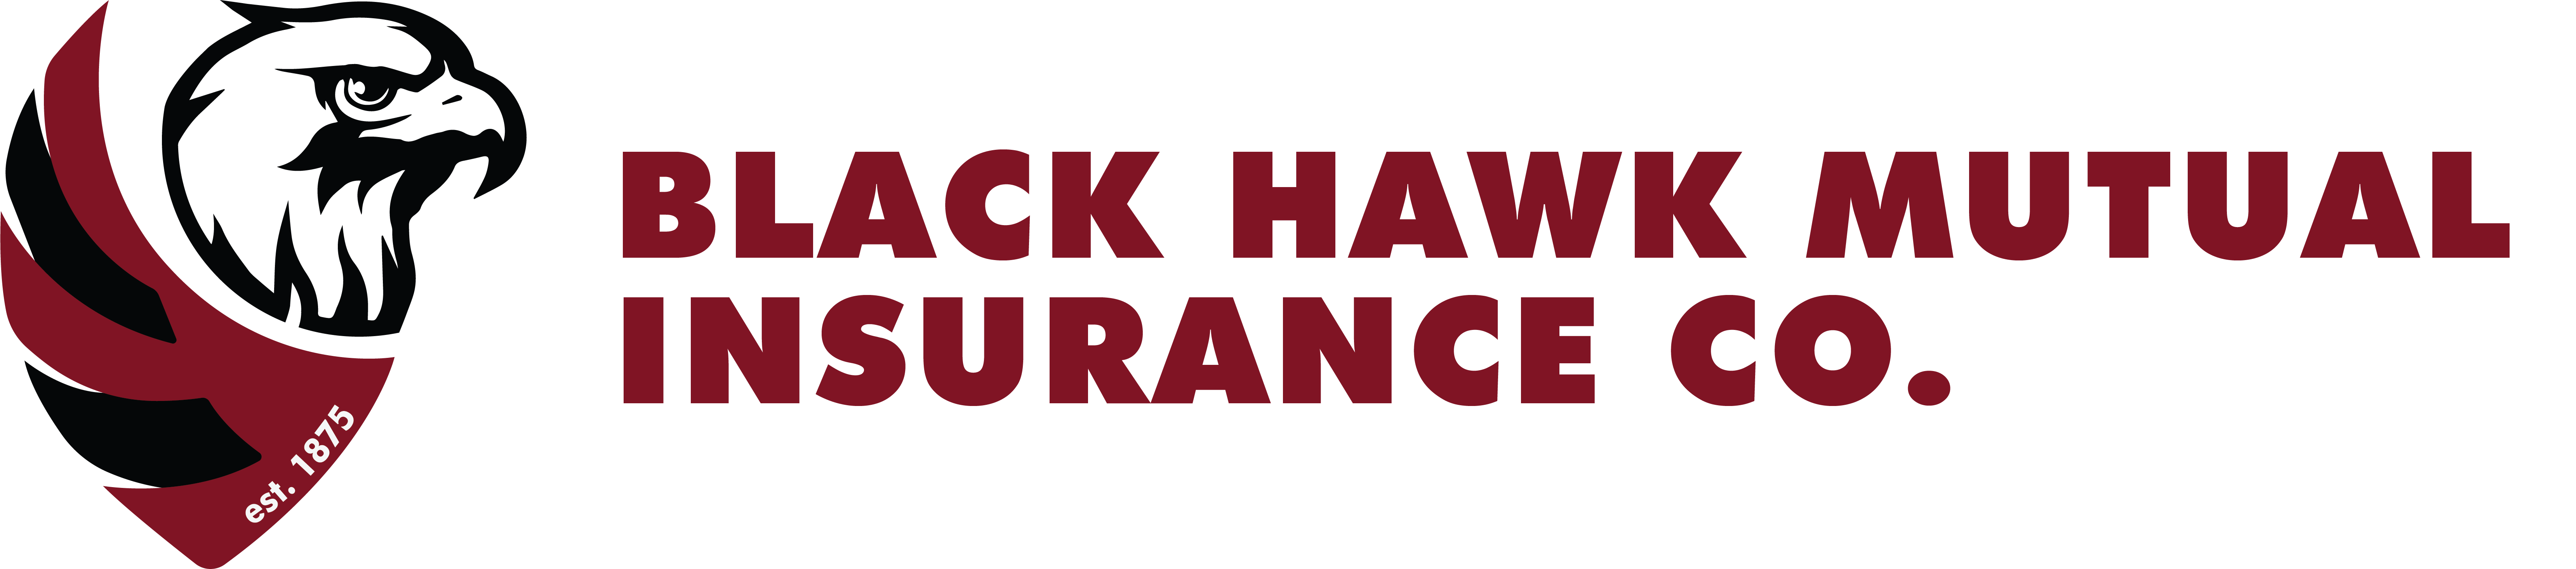 Black Hawk Mutual Insurance Co.